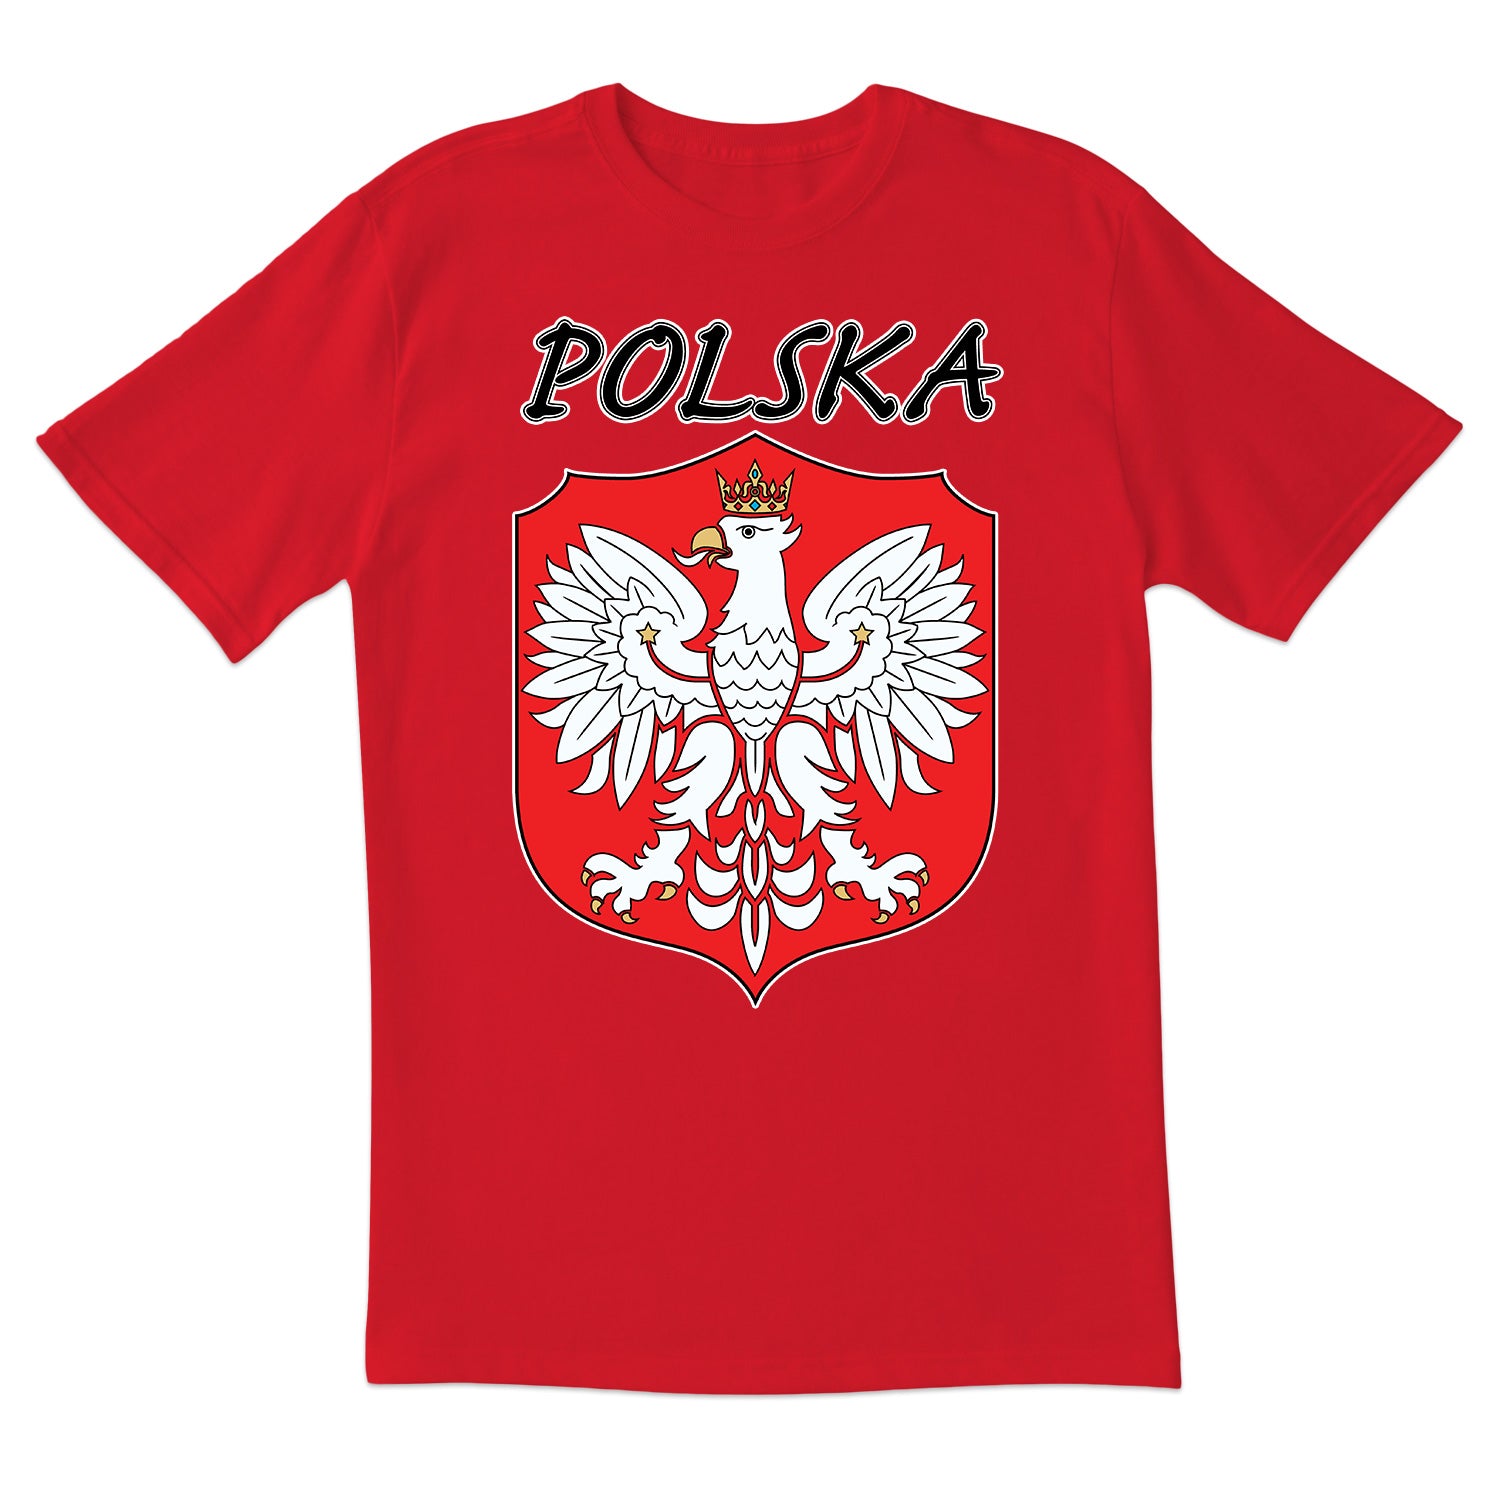 Polska Eagle Shield Short Sleeve Tshirt